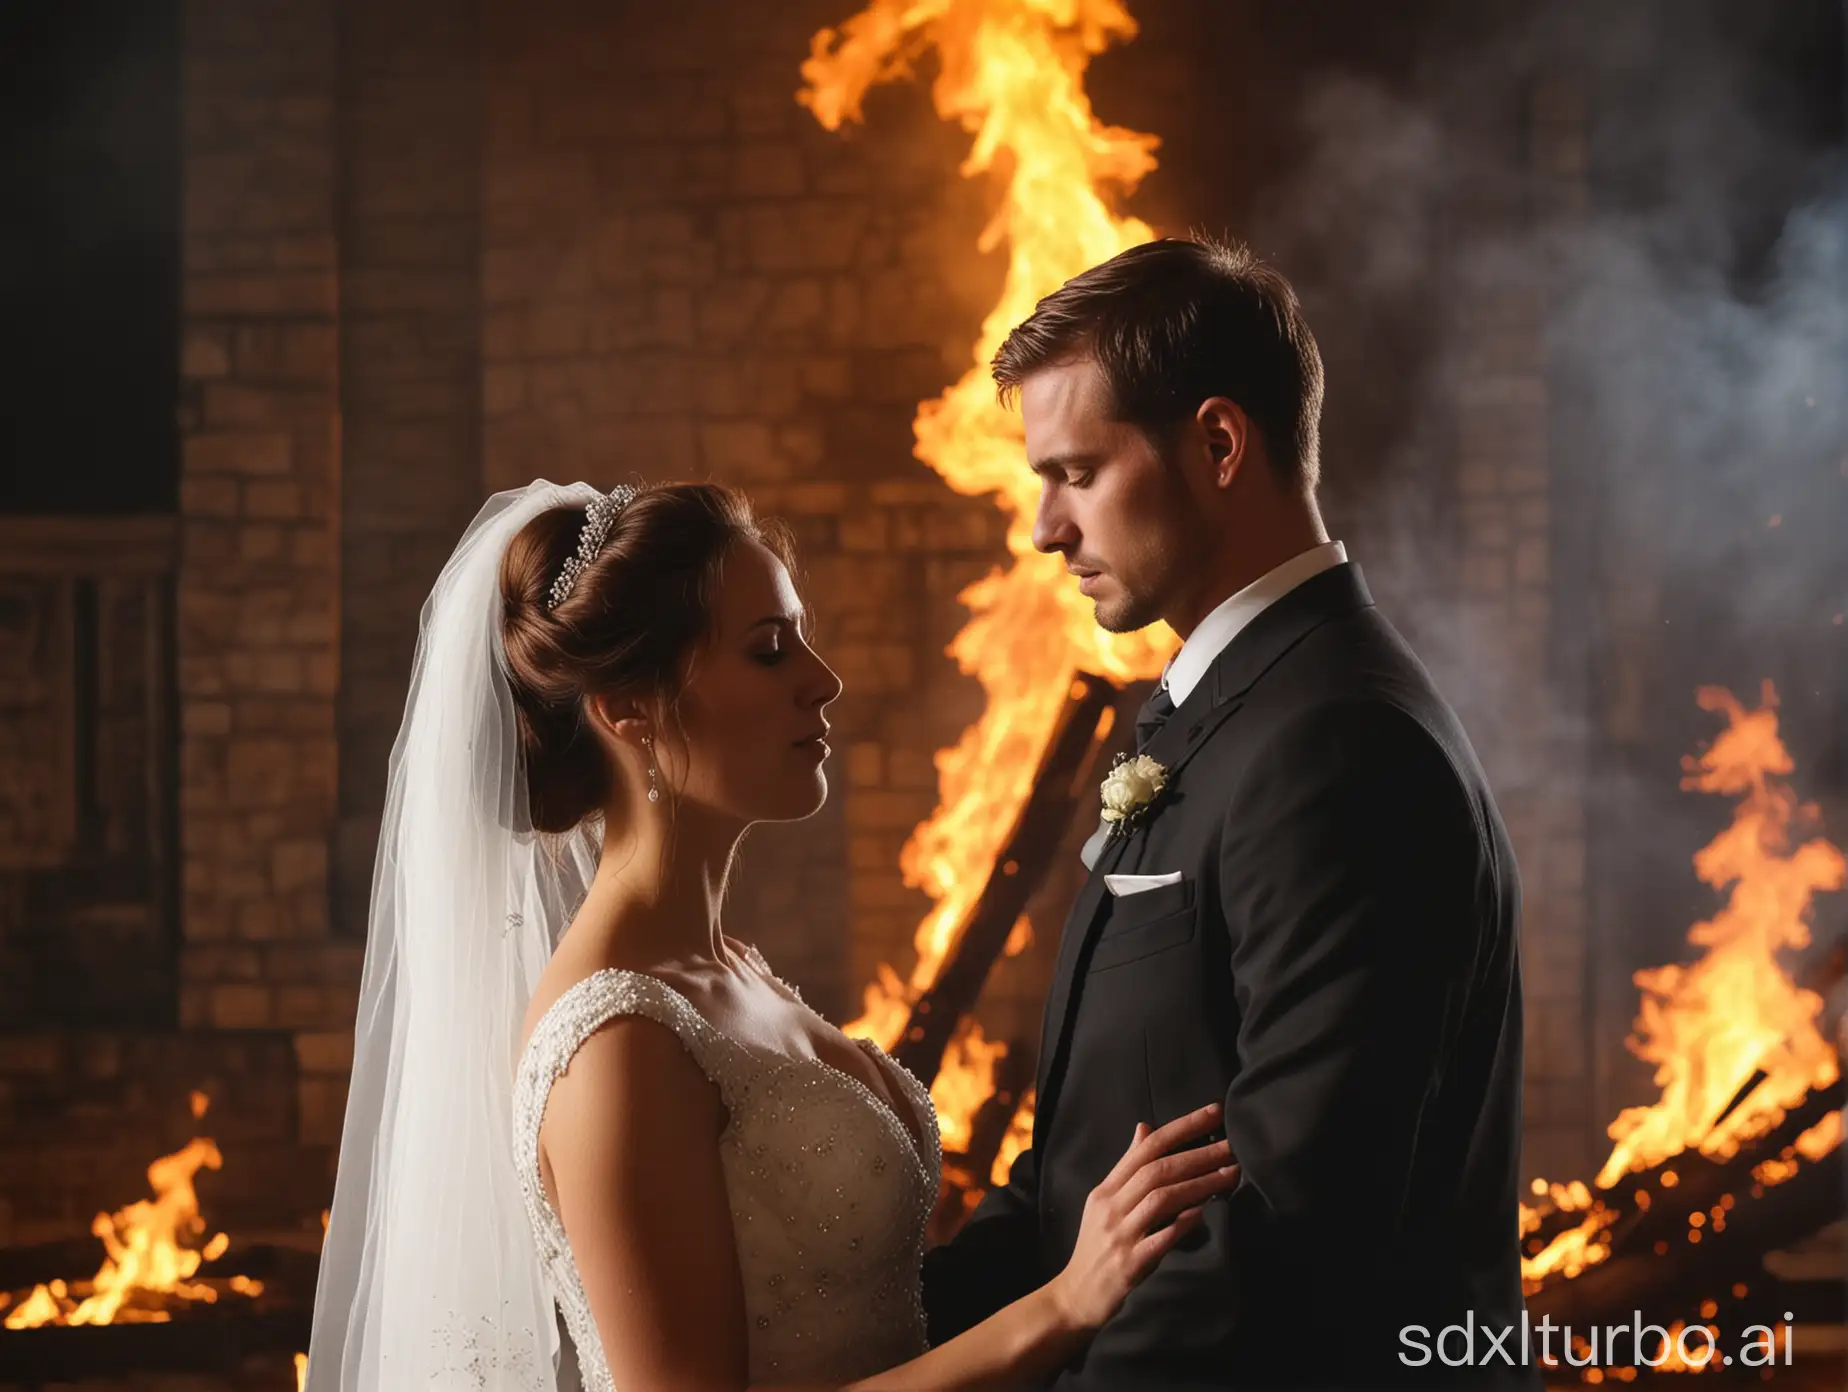 Christian-Sad-Wedding-Couple-with-Fiery-Background